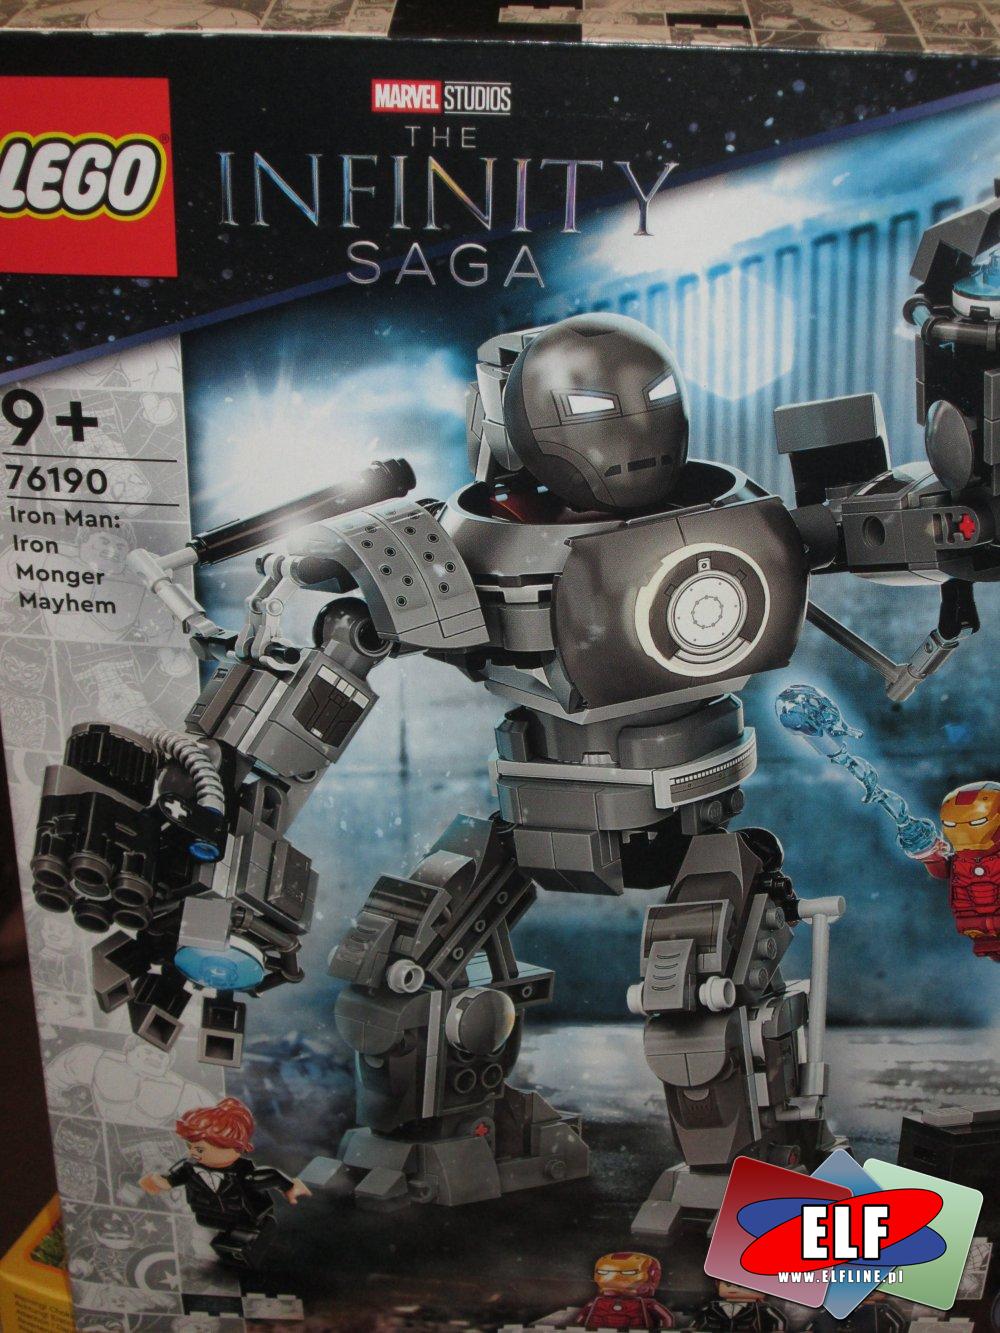 Lego Marvel Infinity Saga, 76190 Iron Man zadyma z Iron Mongerem, klocki